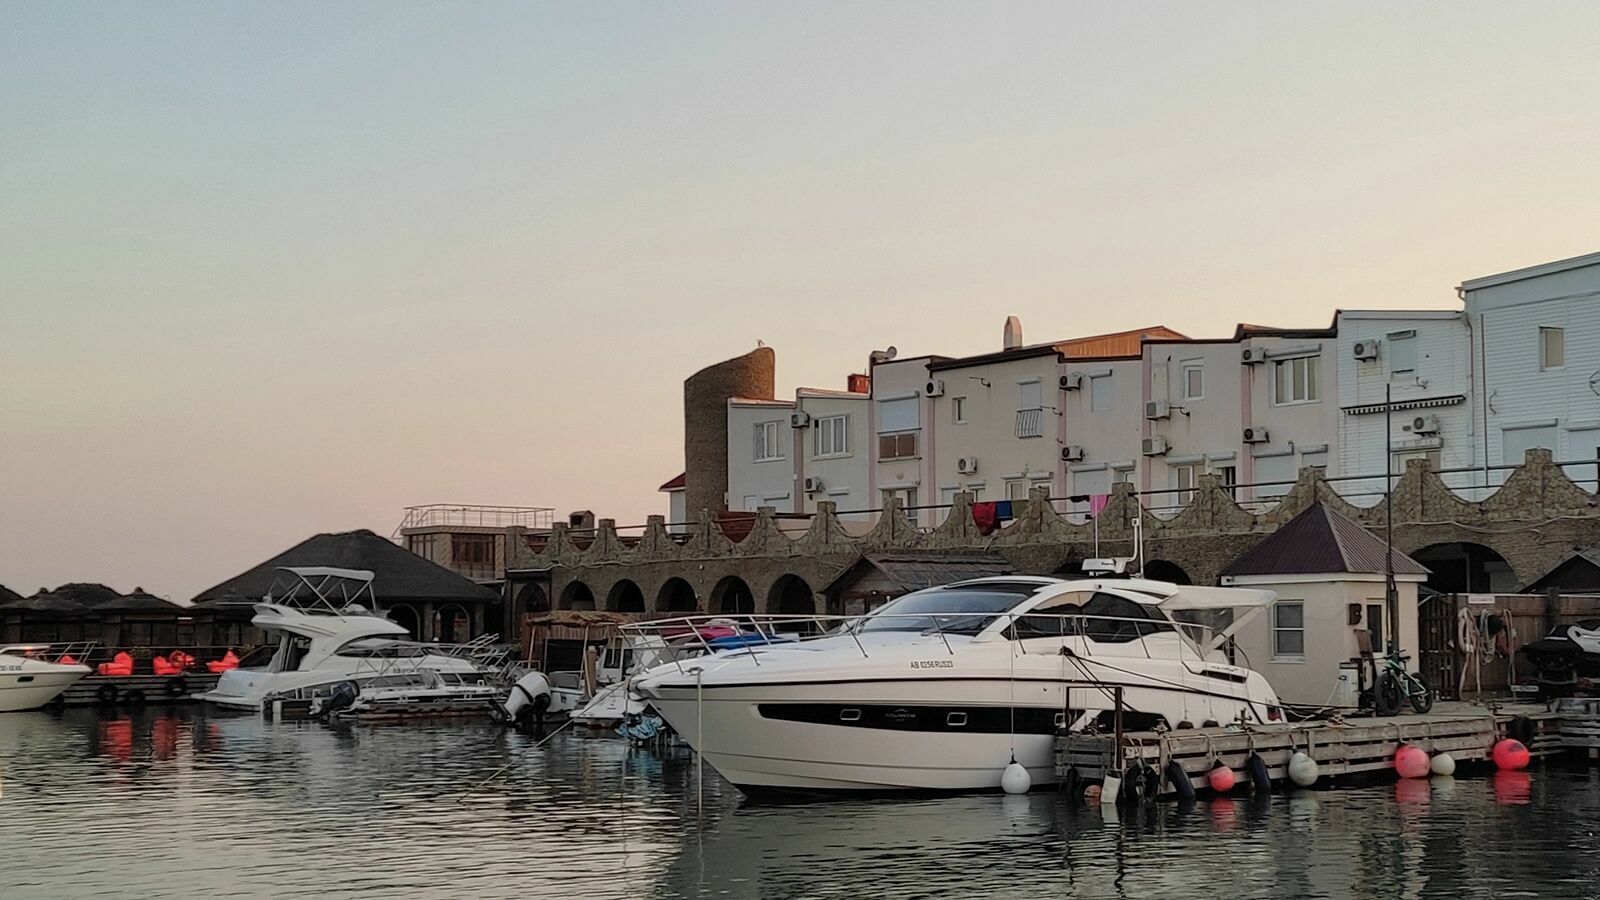 Яхта Сергея Галицкого появилась в Монако на яхт-шоу